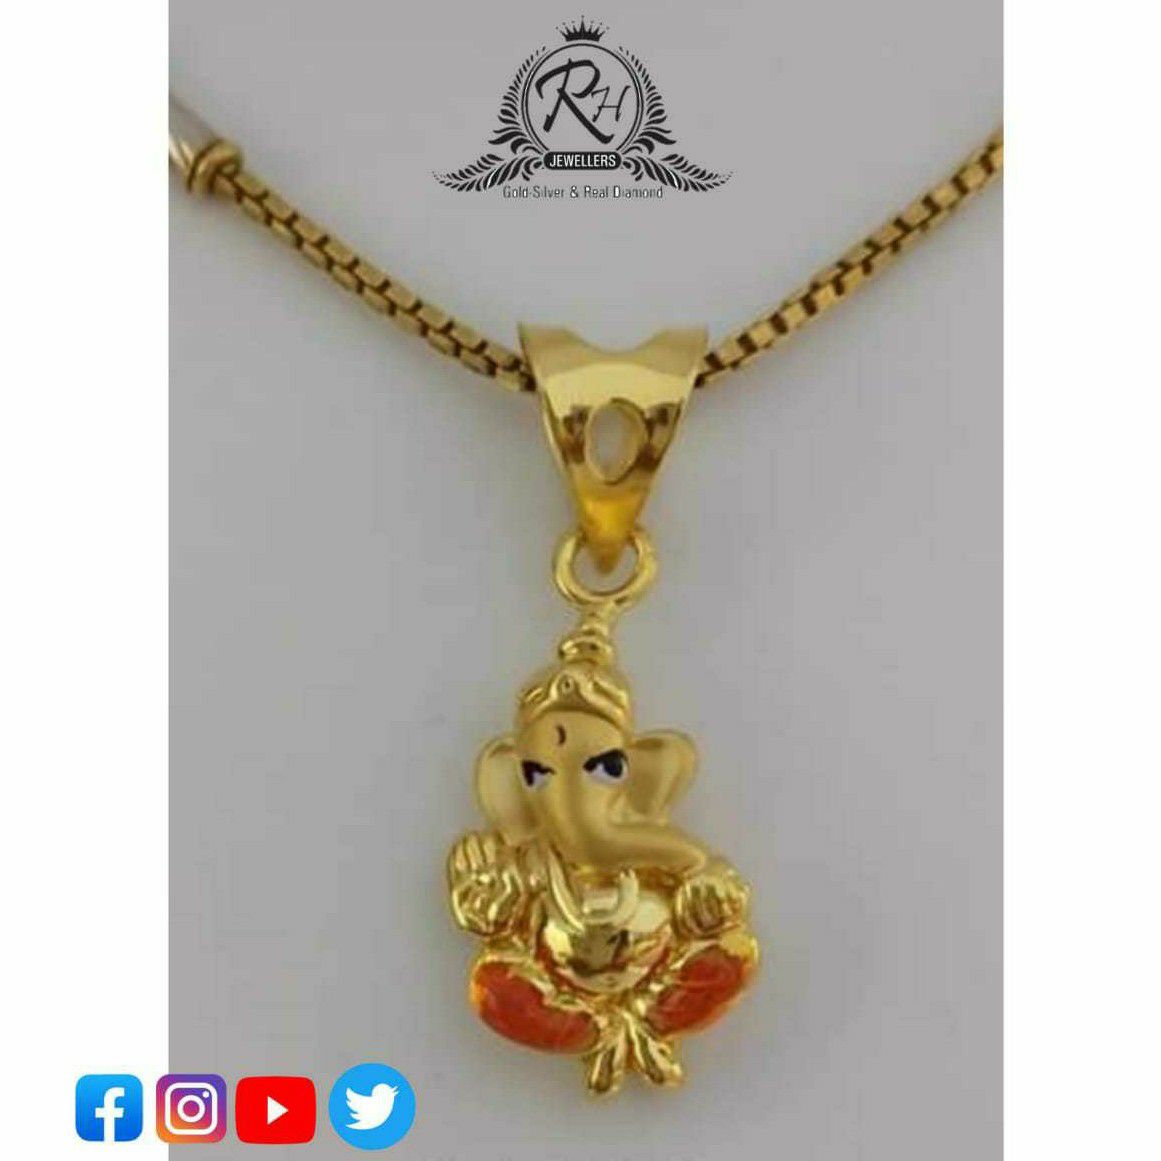 22 Carat Gold Ganesha Pendant Chain RH-PC499